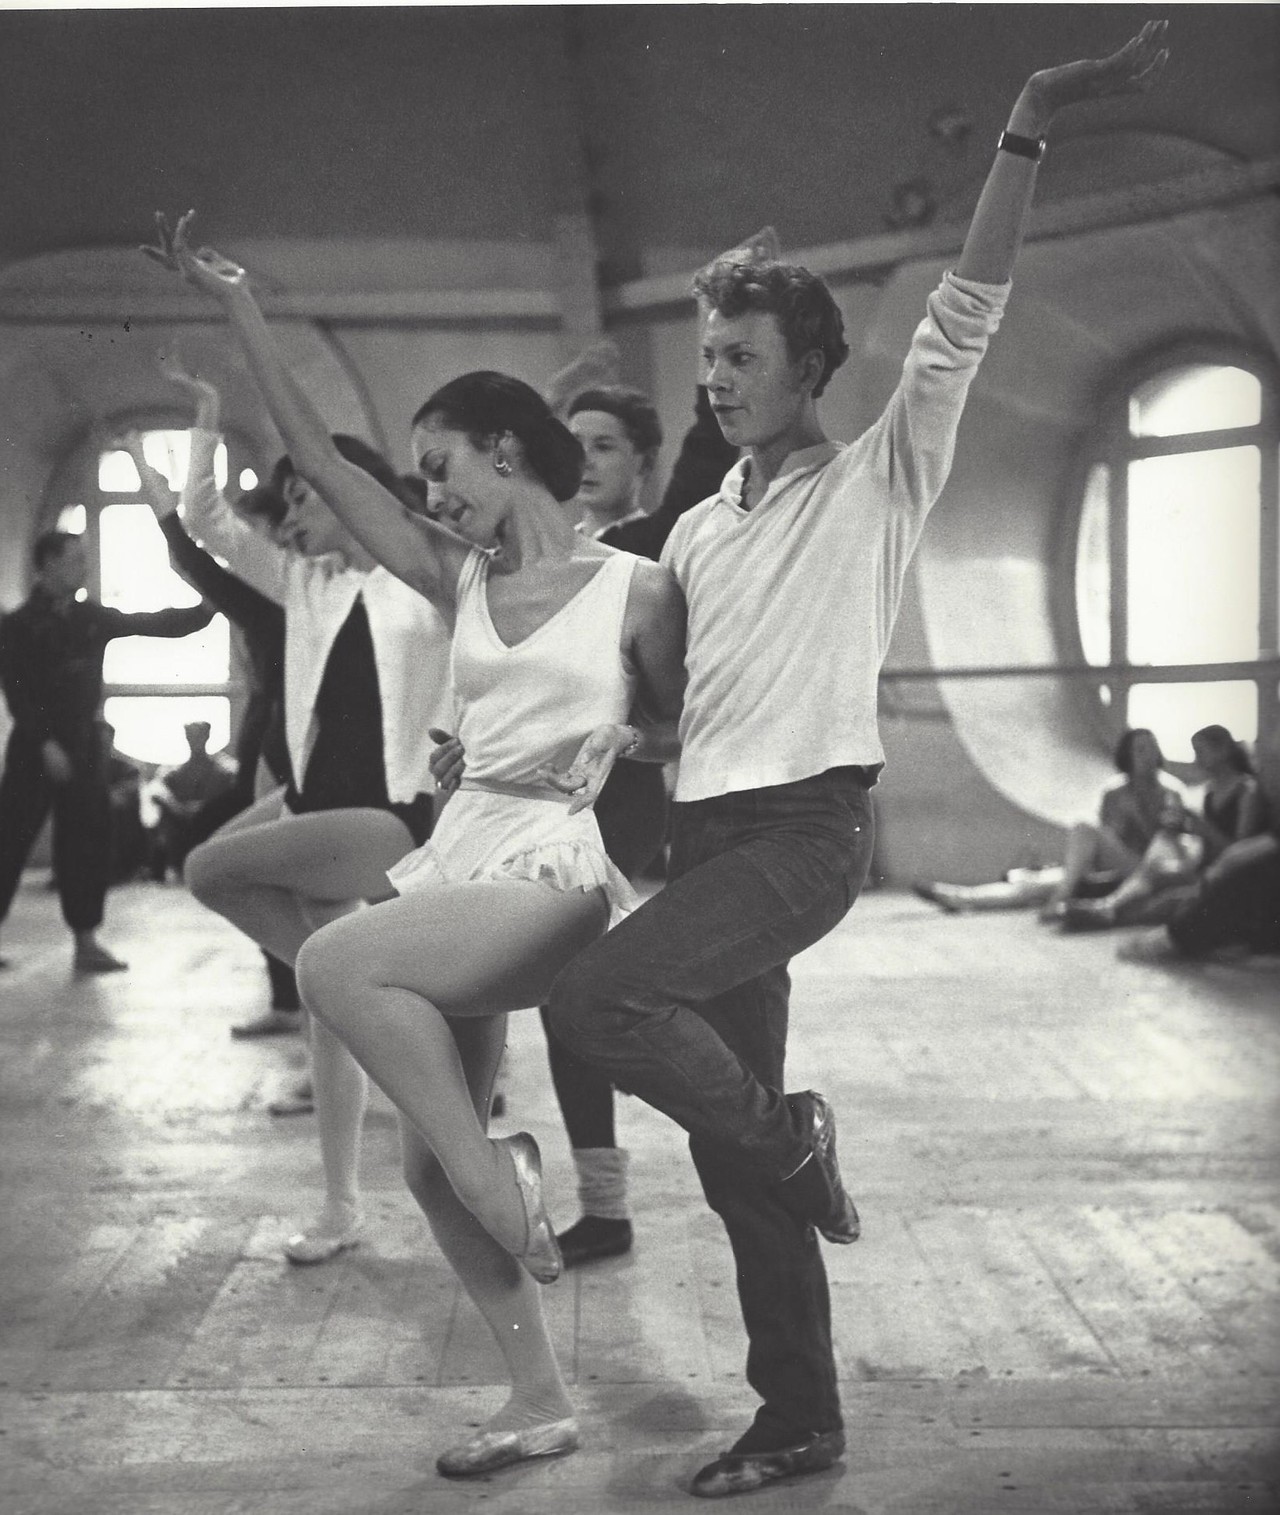 Балетный класс, Париж, 1950-е. Фотограф Кис Шерер